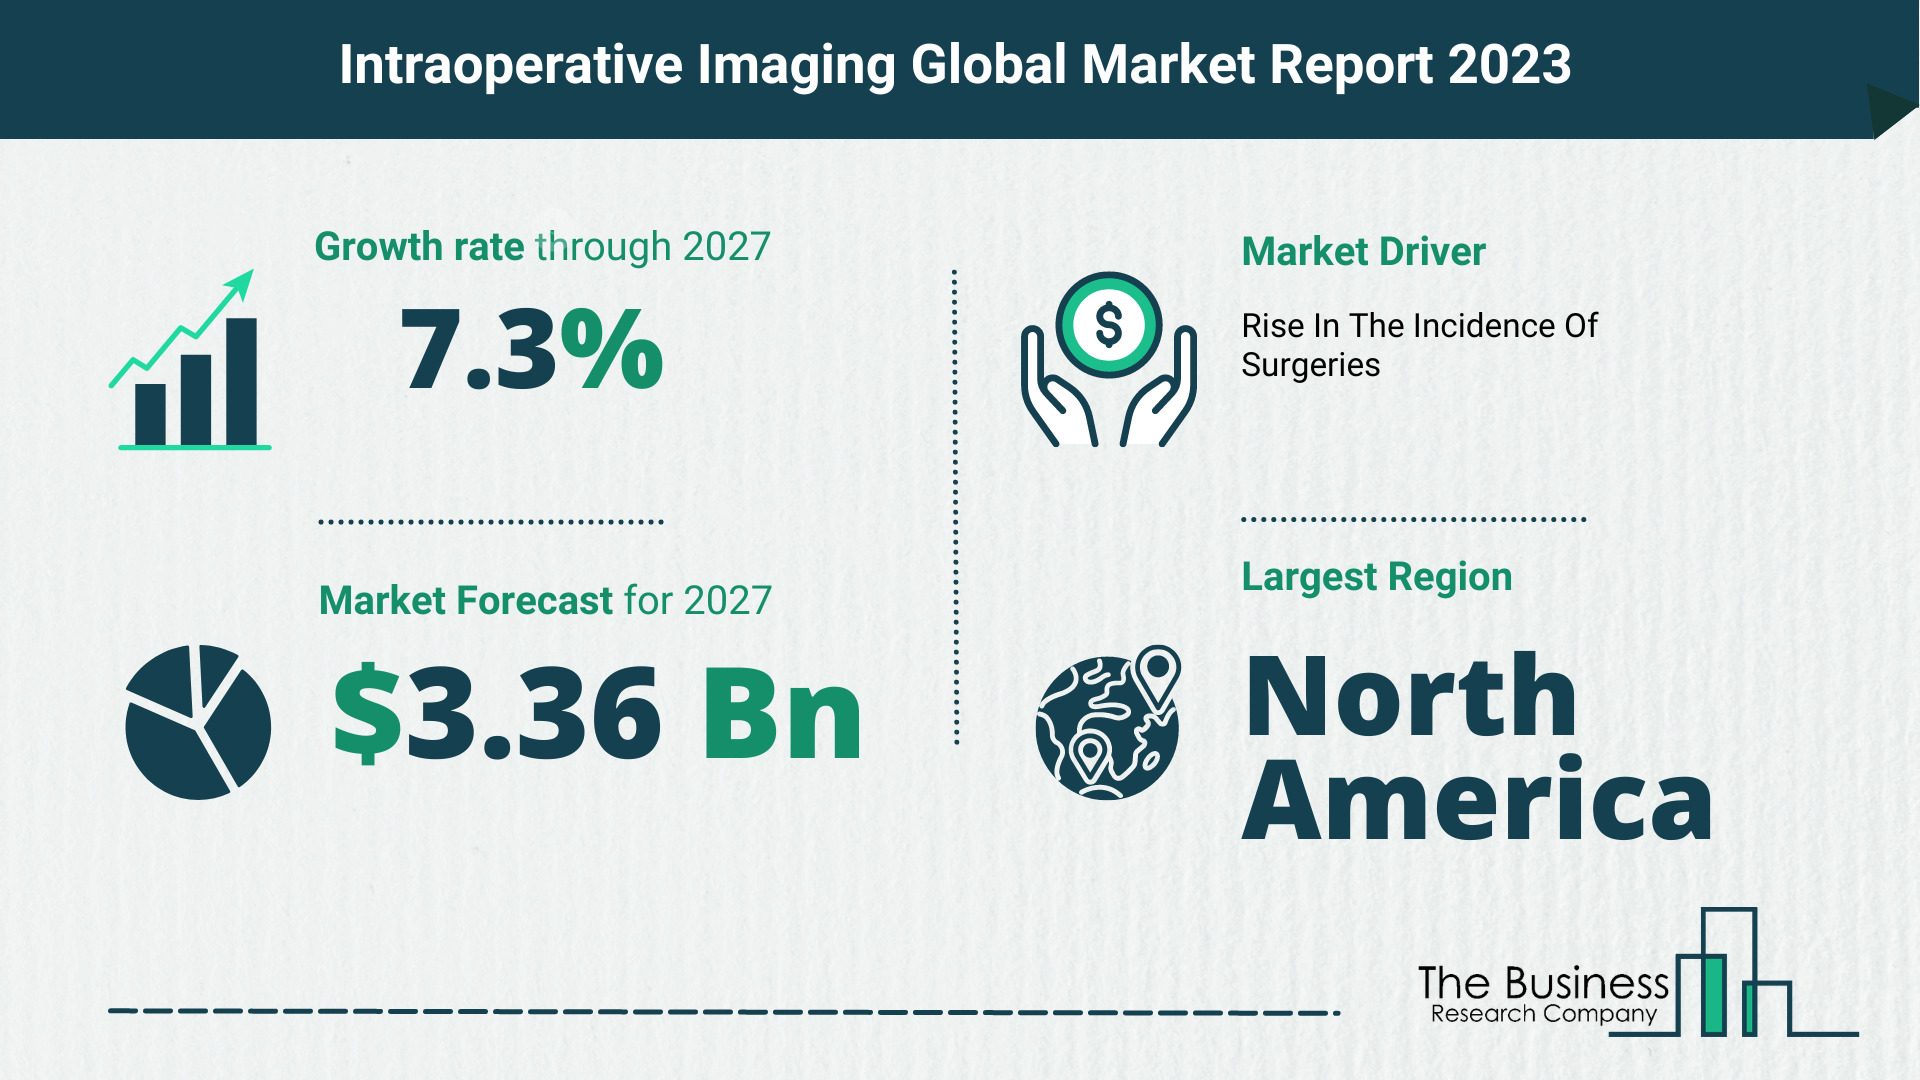 Global Intraoperative Imaging Market